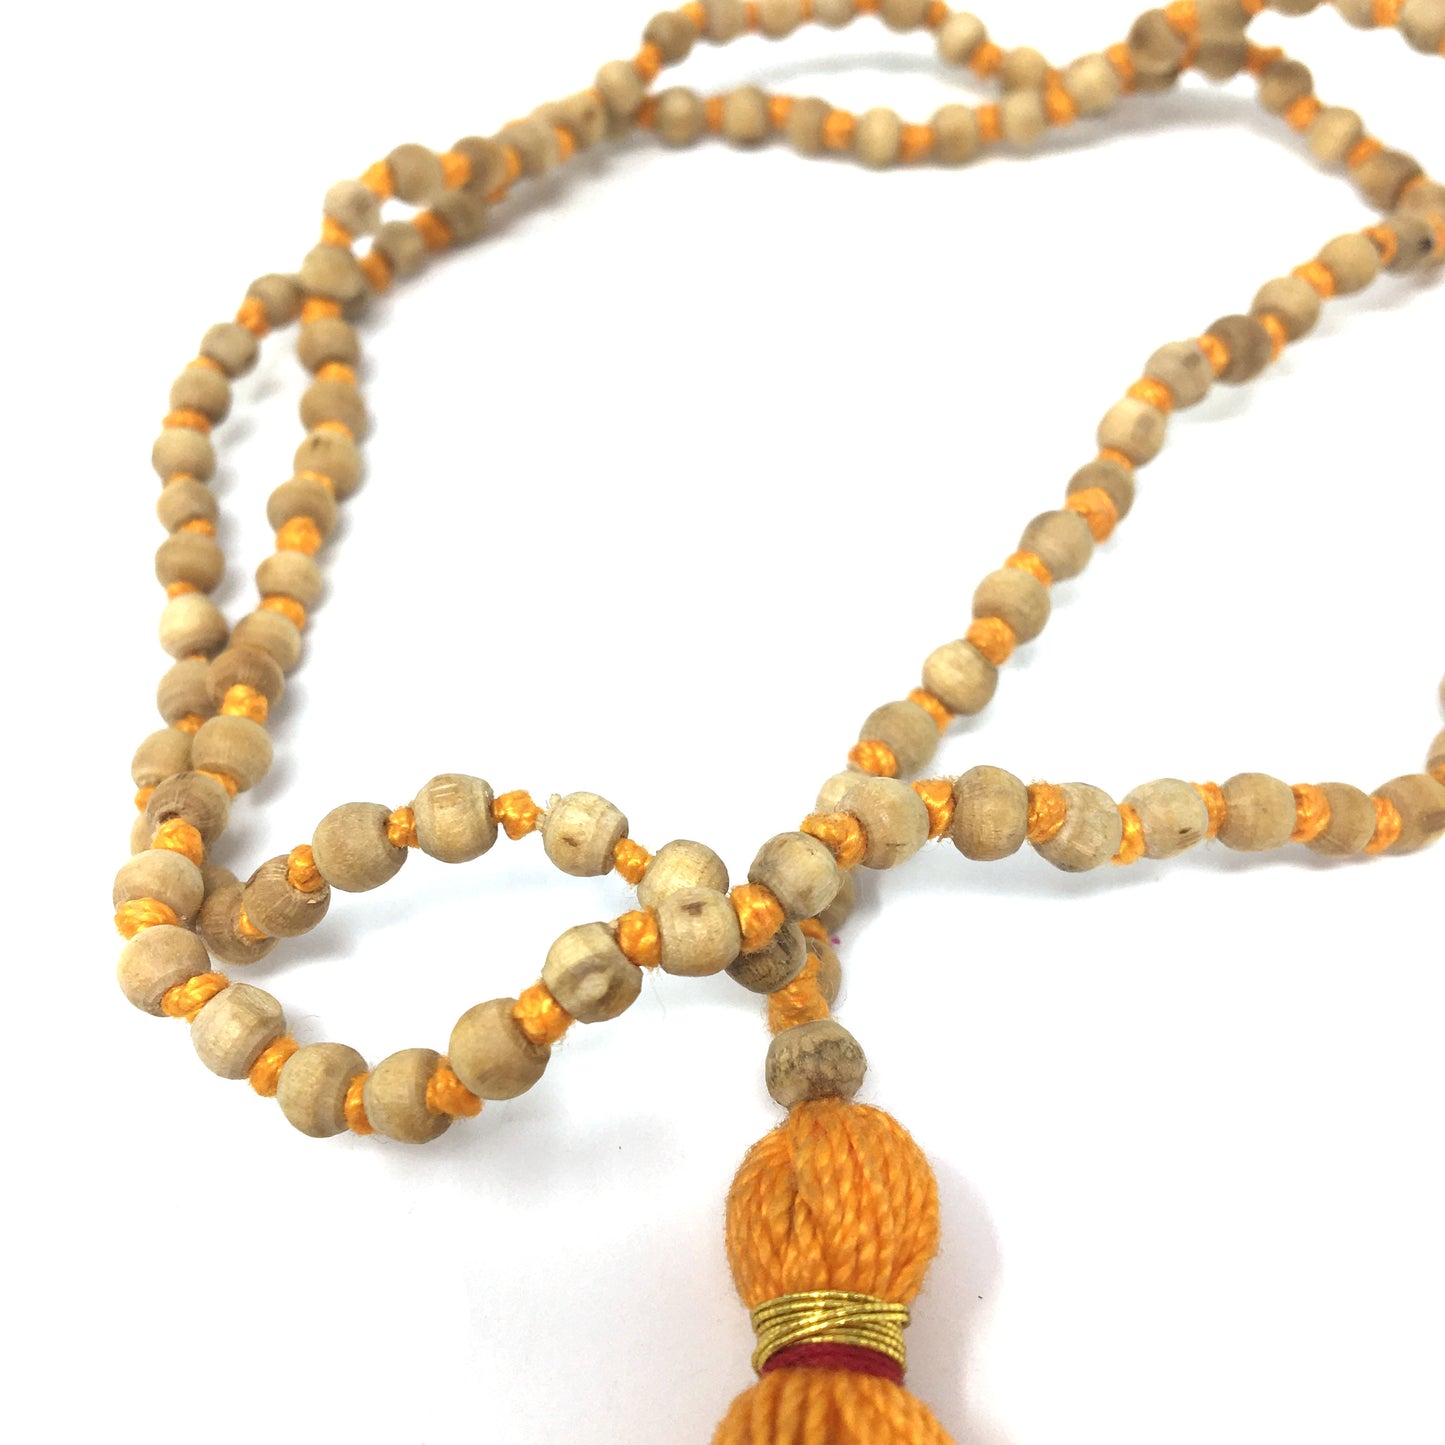 Handcrafted India Beads Rudrani Mala Thread Shakti Japa Hindu Sacred Rosary